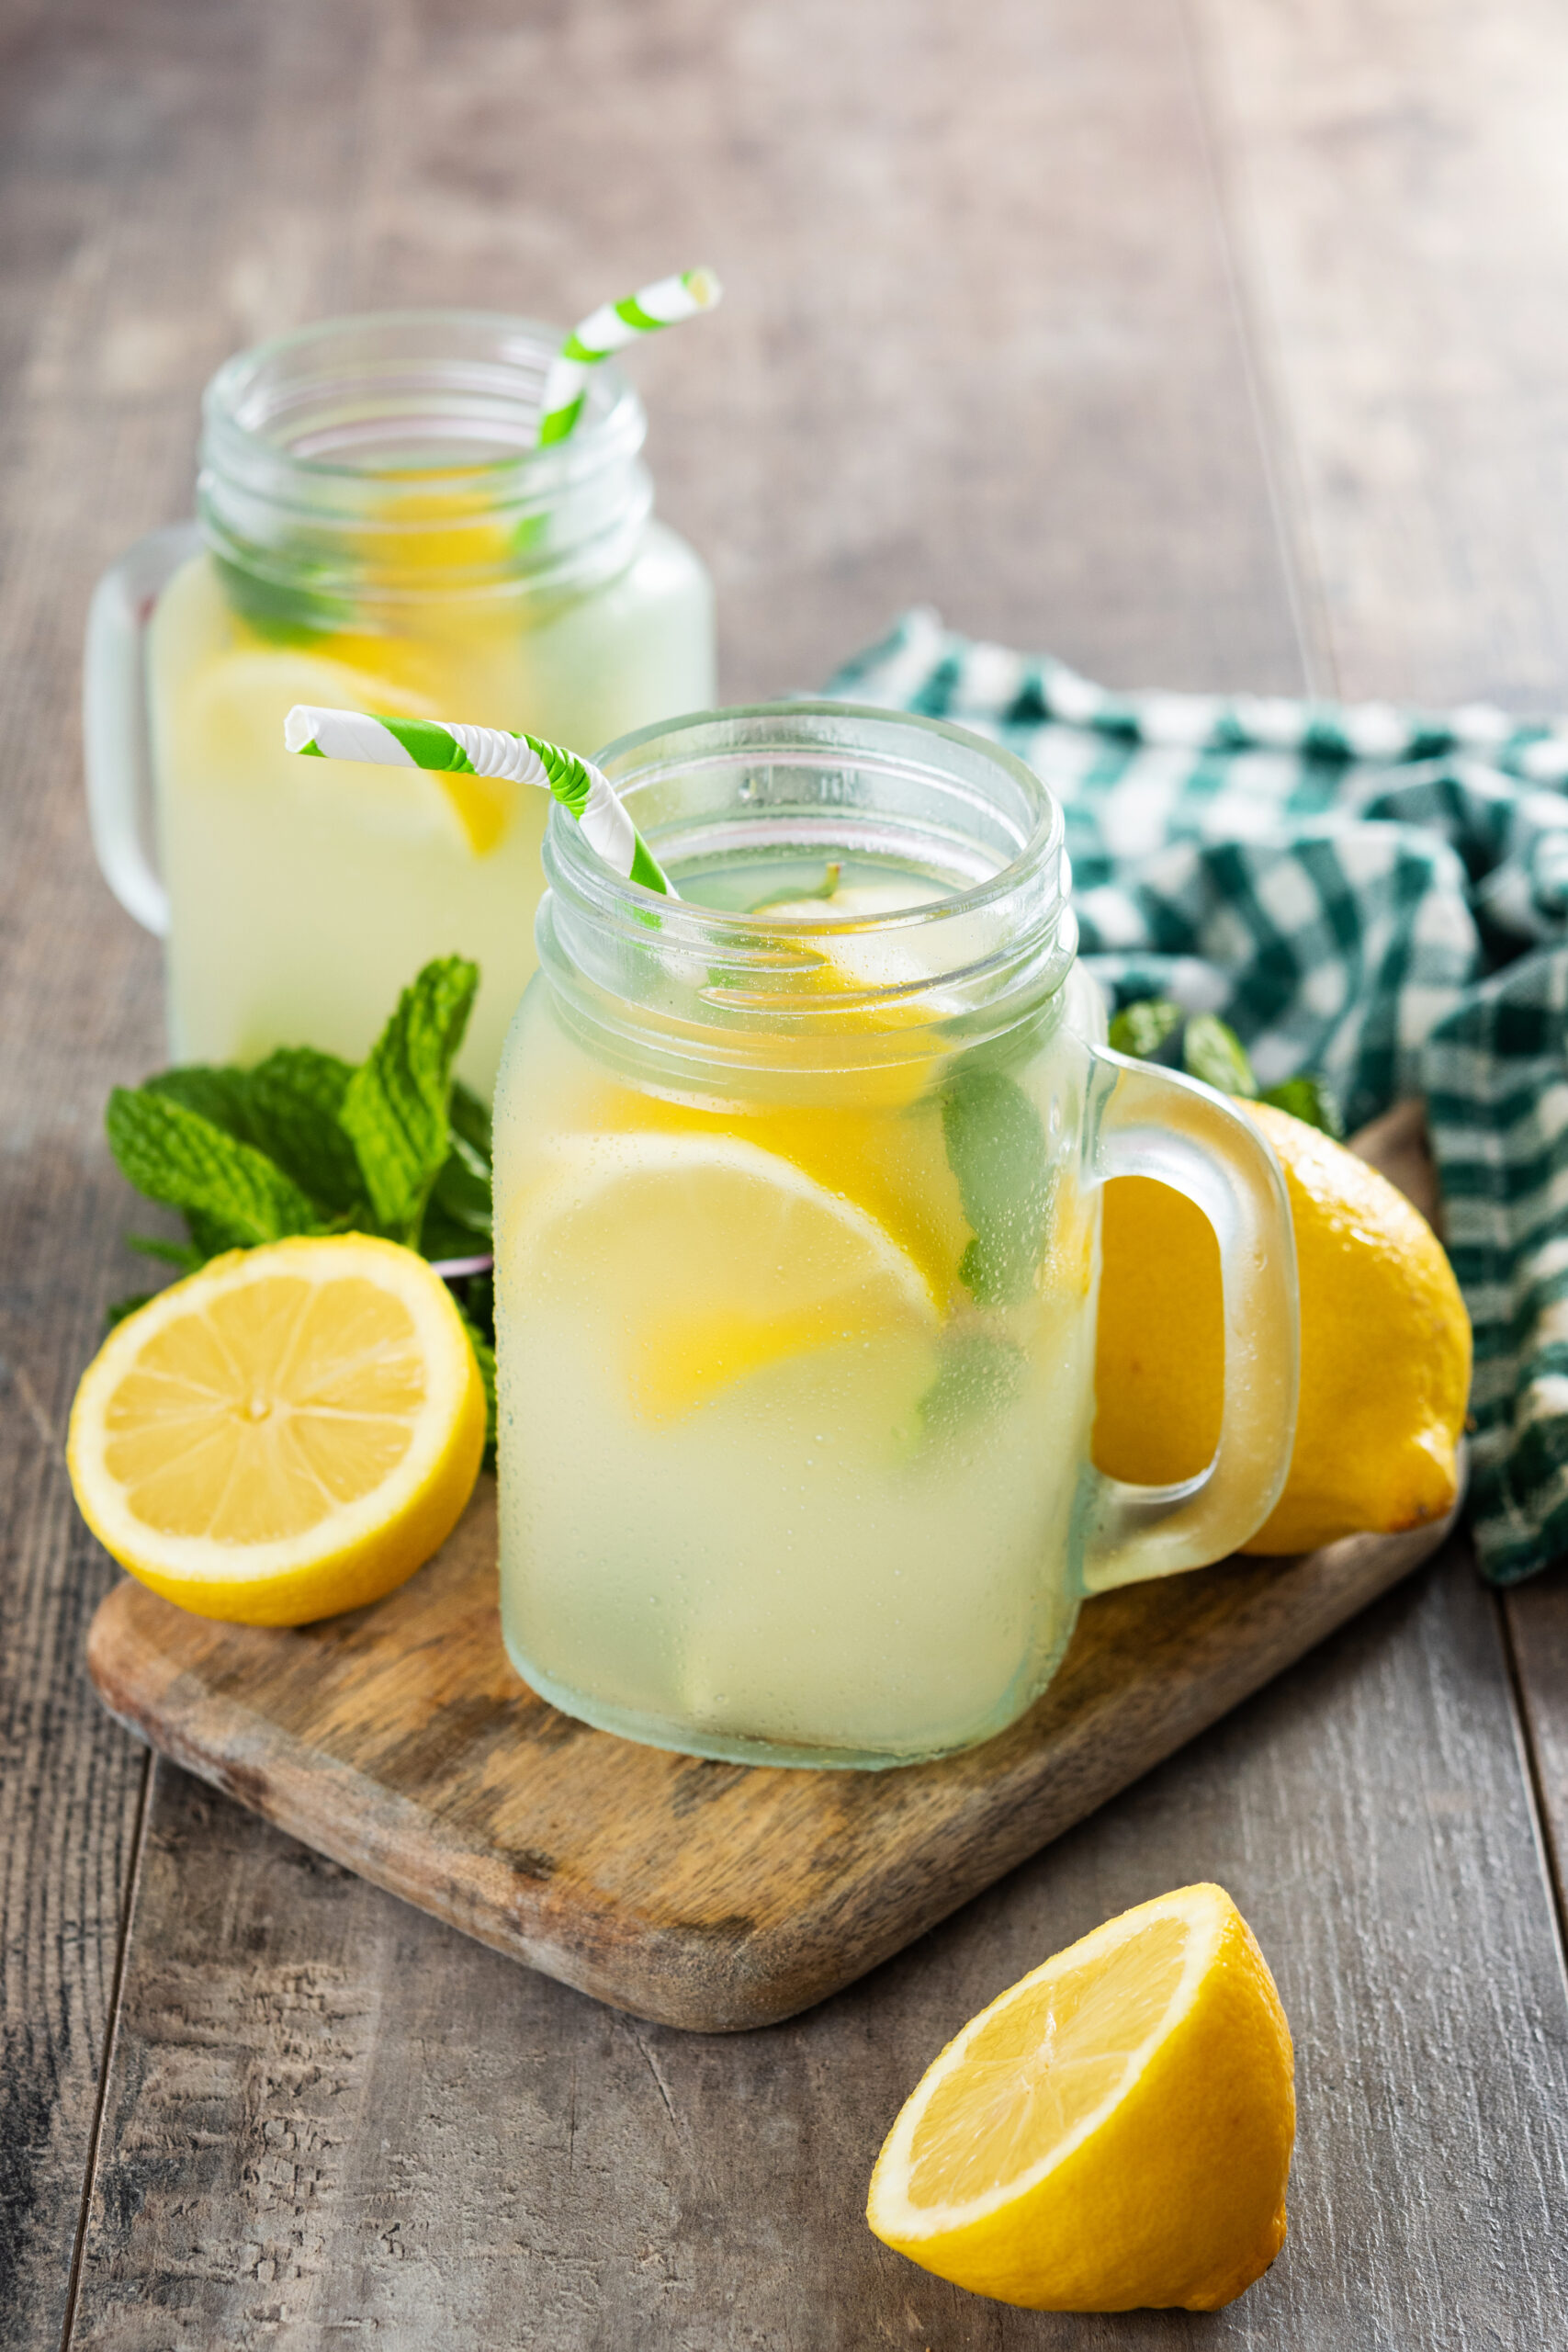 Lemonade drink in a jar glass on wooden table